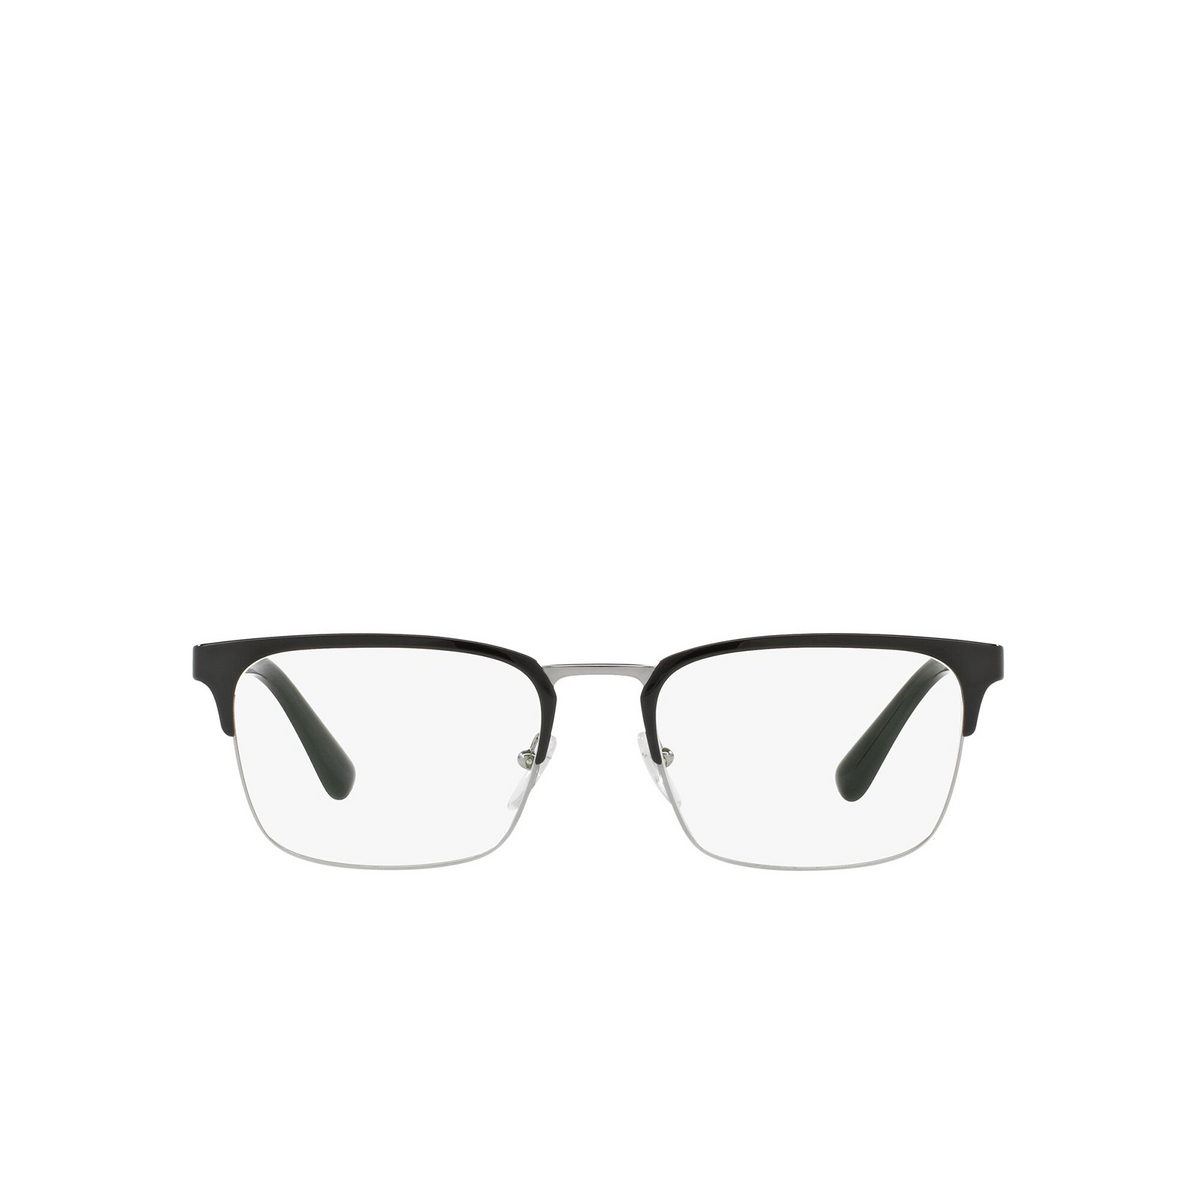 Prada® Rectangle Eyeglasses: Heritage PR 54TV color Black / Gunmetal 1AB1O1 - front view.